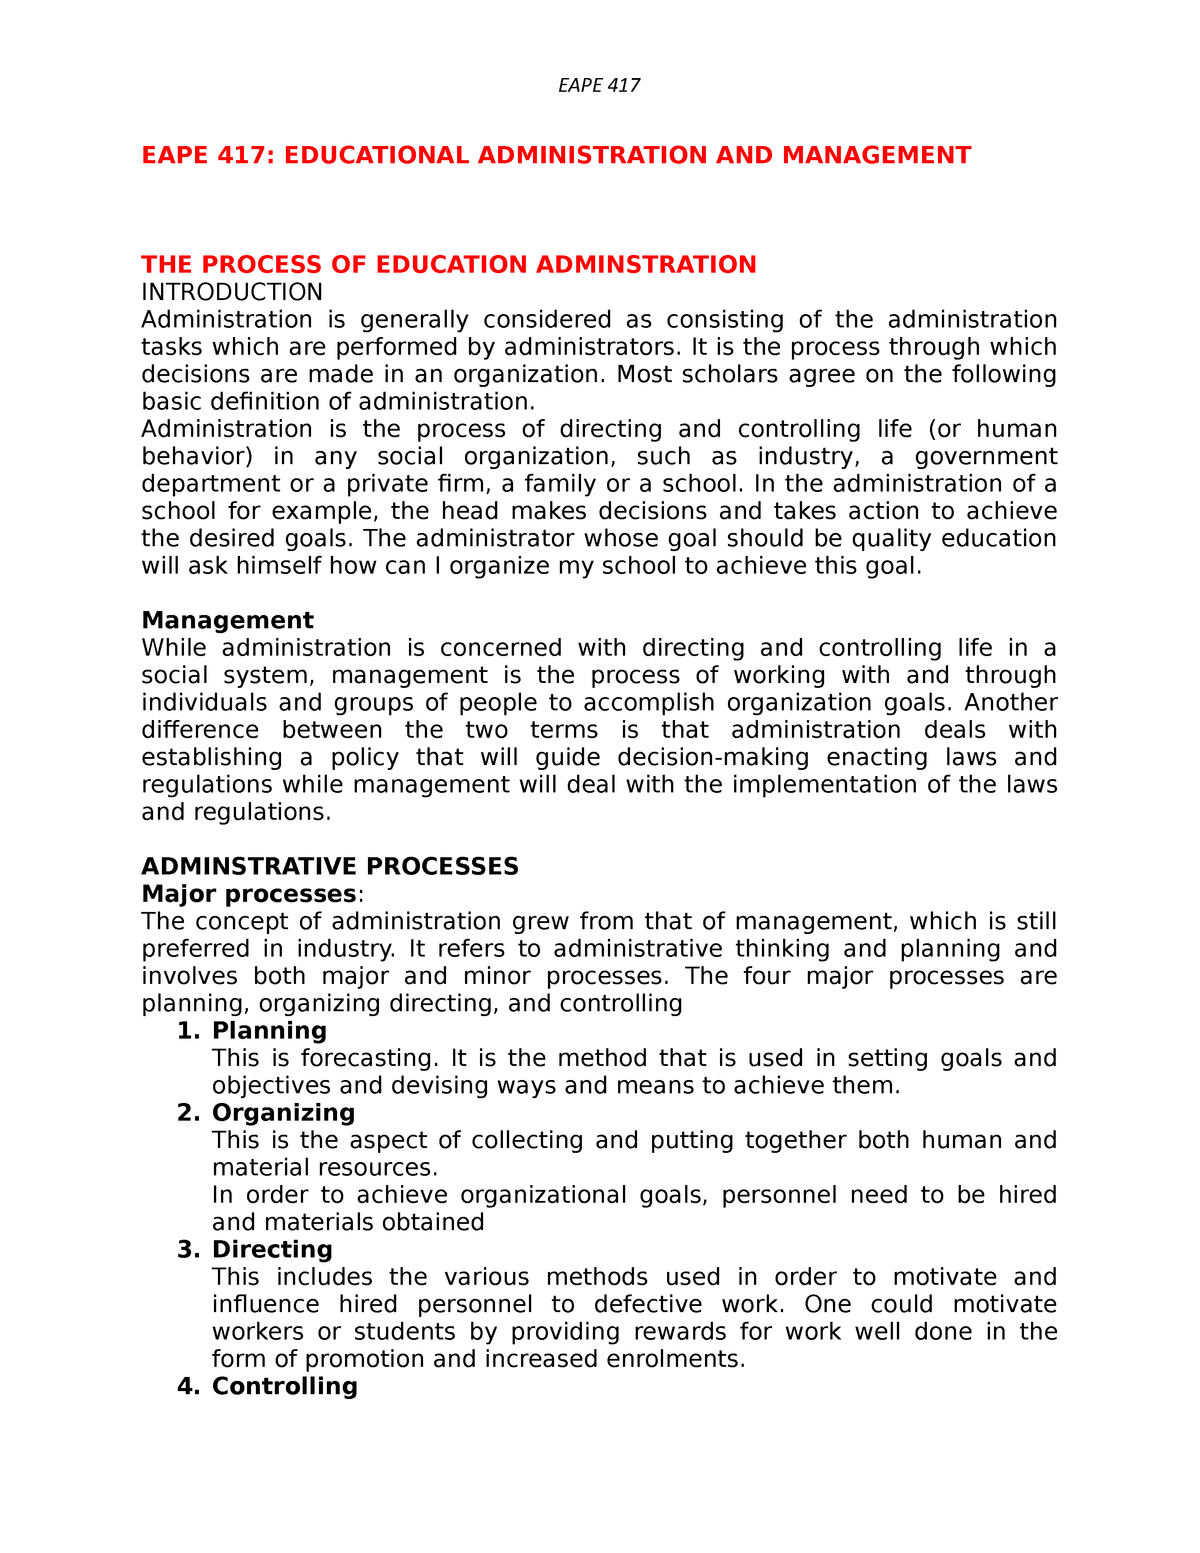 dissertation on educational administration